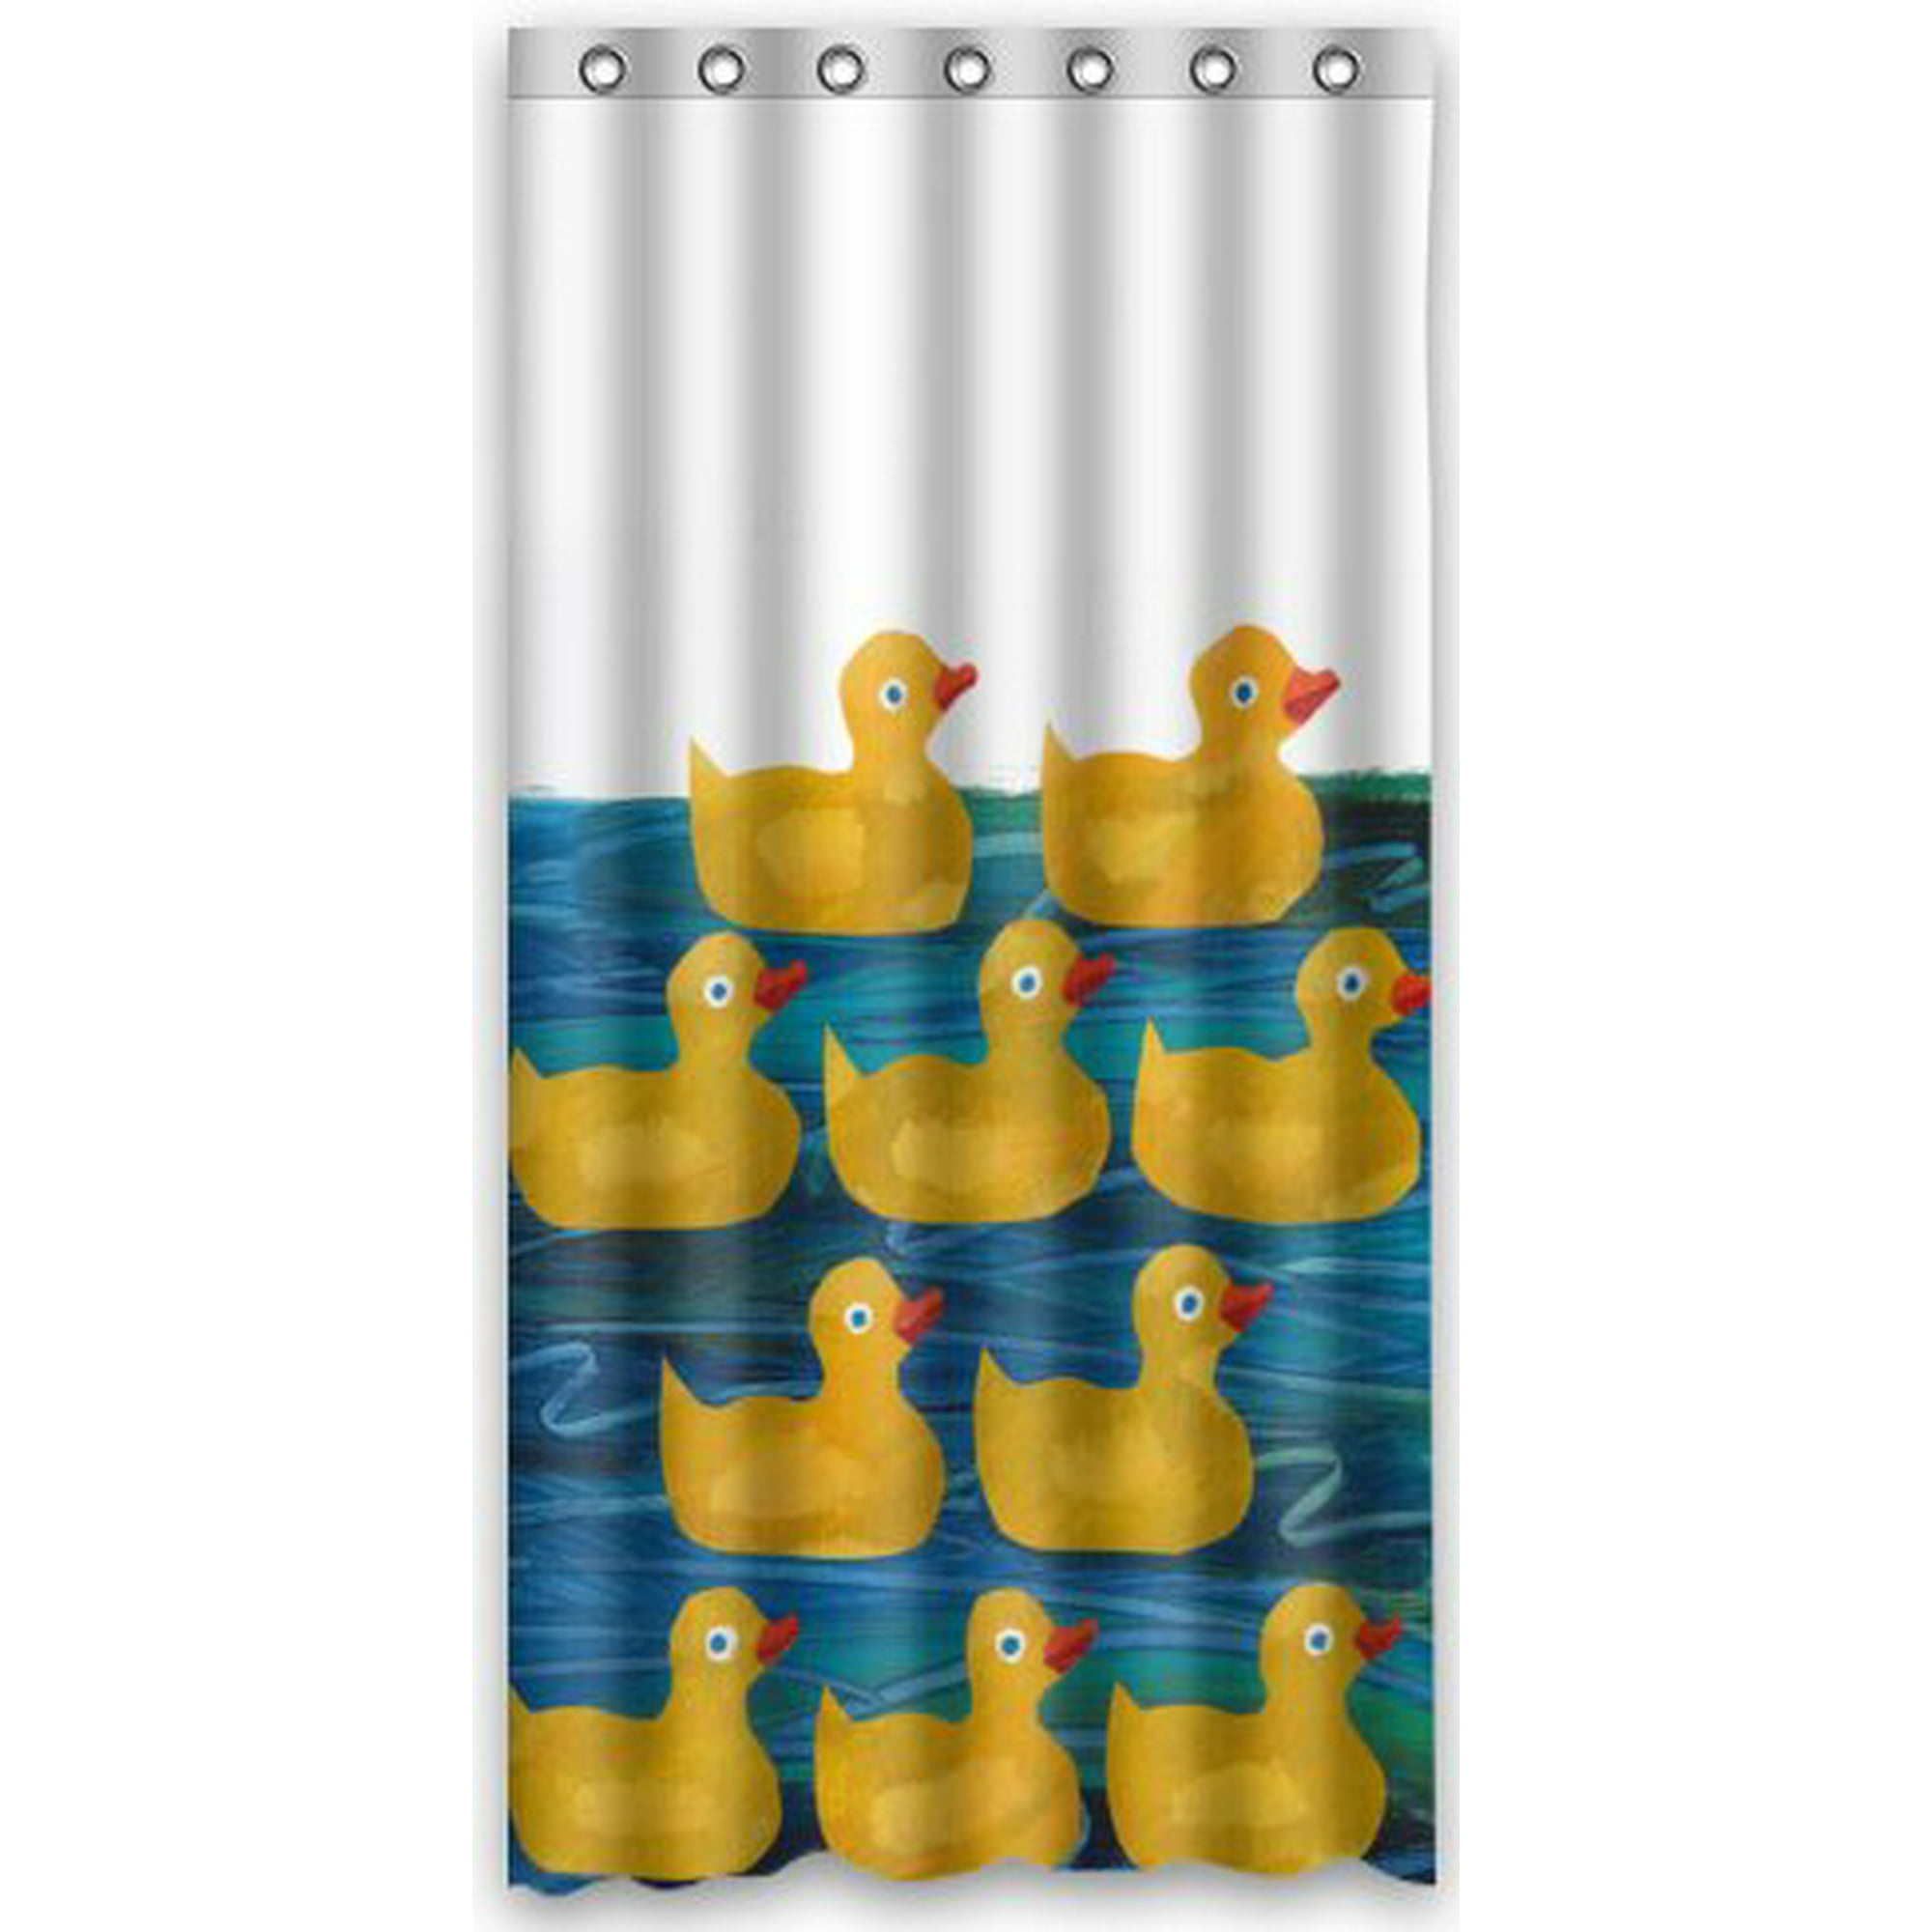 Xddja Yellow Rubber Duck Shower Curtain, Rubber Duck Fabric Shower Curtain